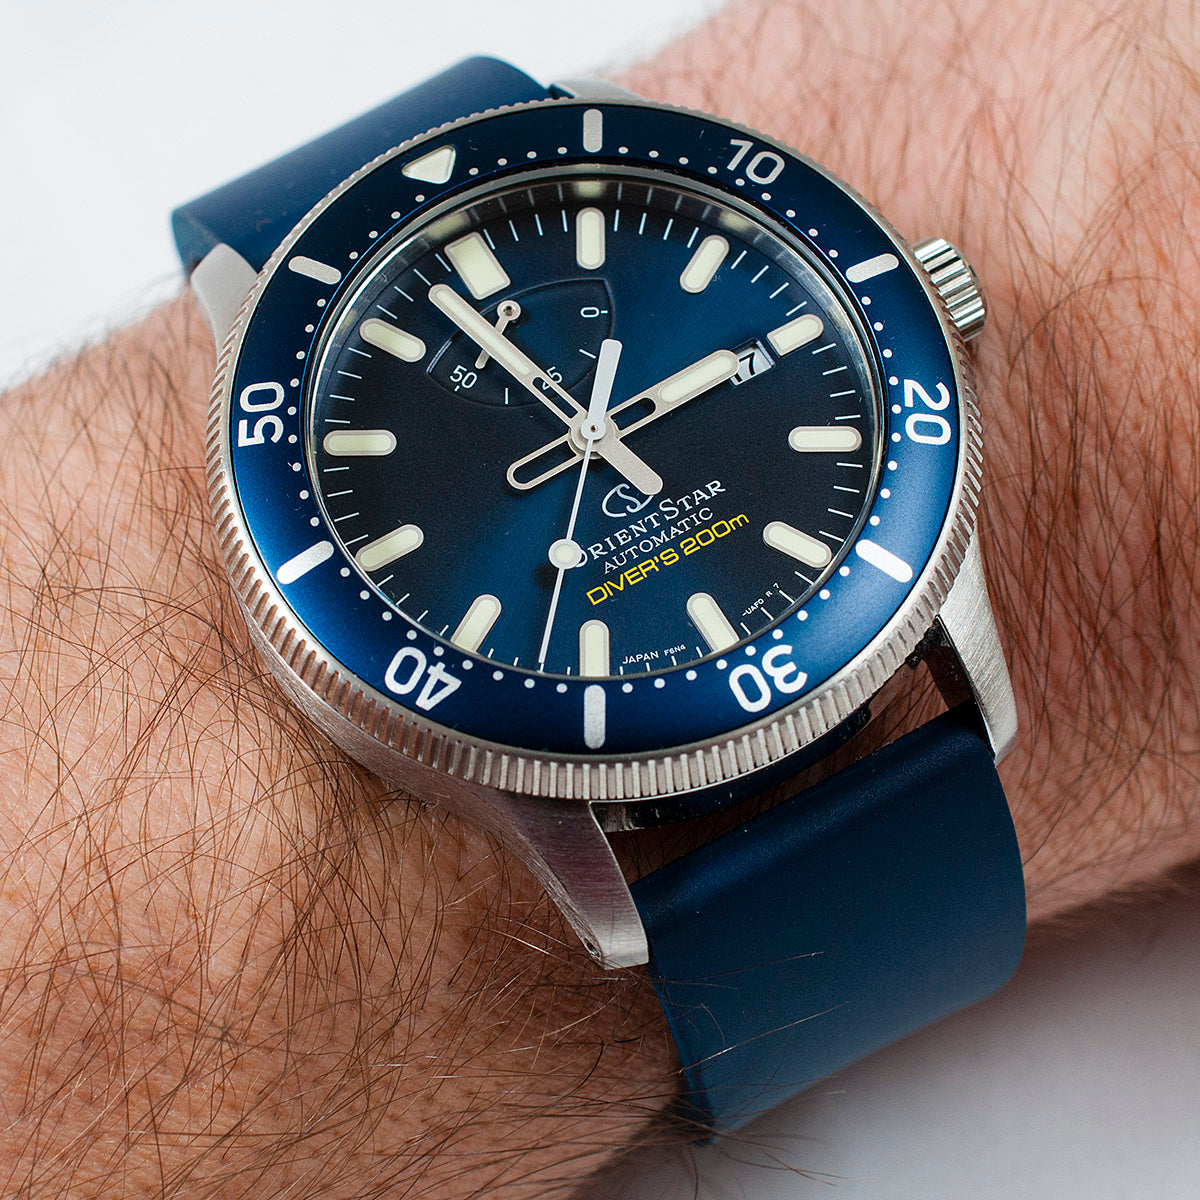 FKM Rubber Quick Release Replacement Watch Straps Bands 19mm 20,mm 21mm 22mm 24mm blue orientstar 200m diver